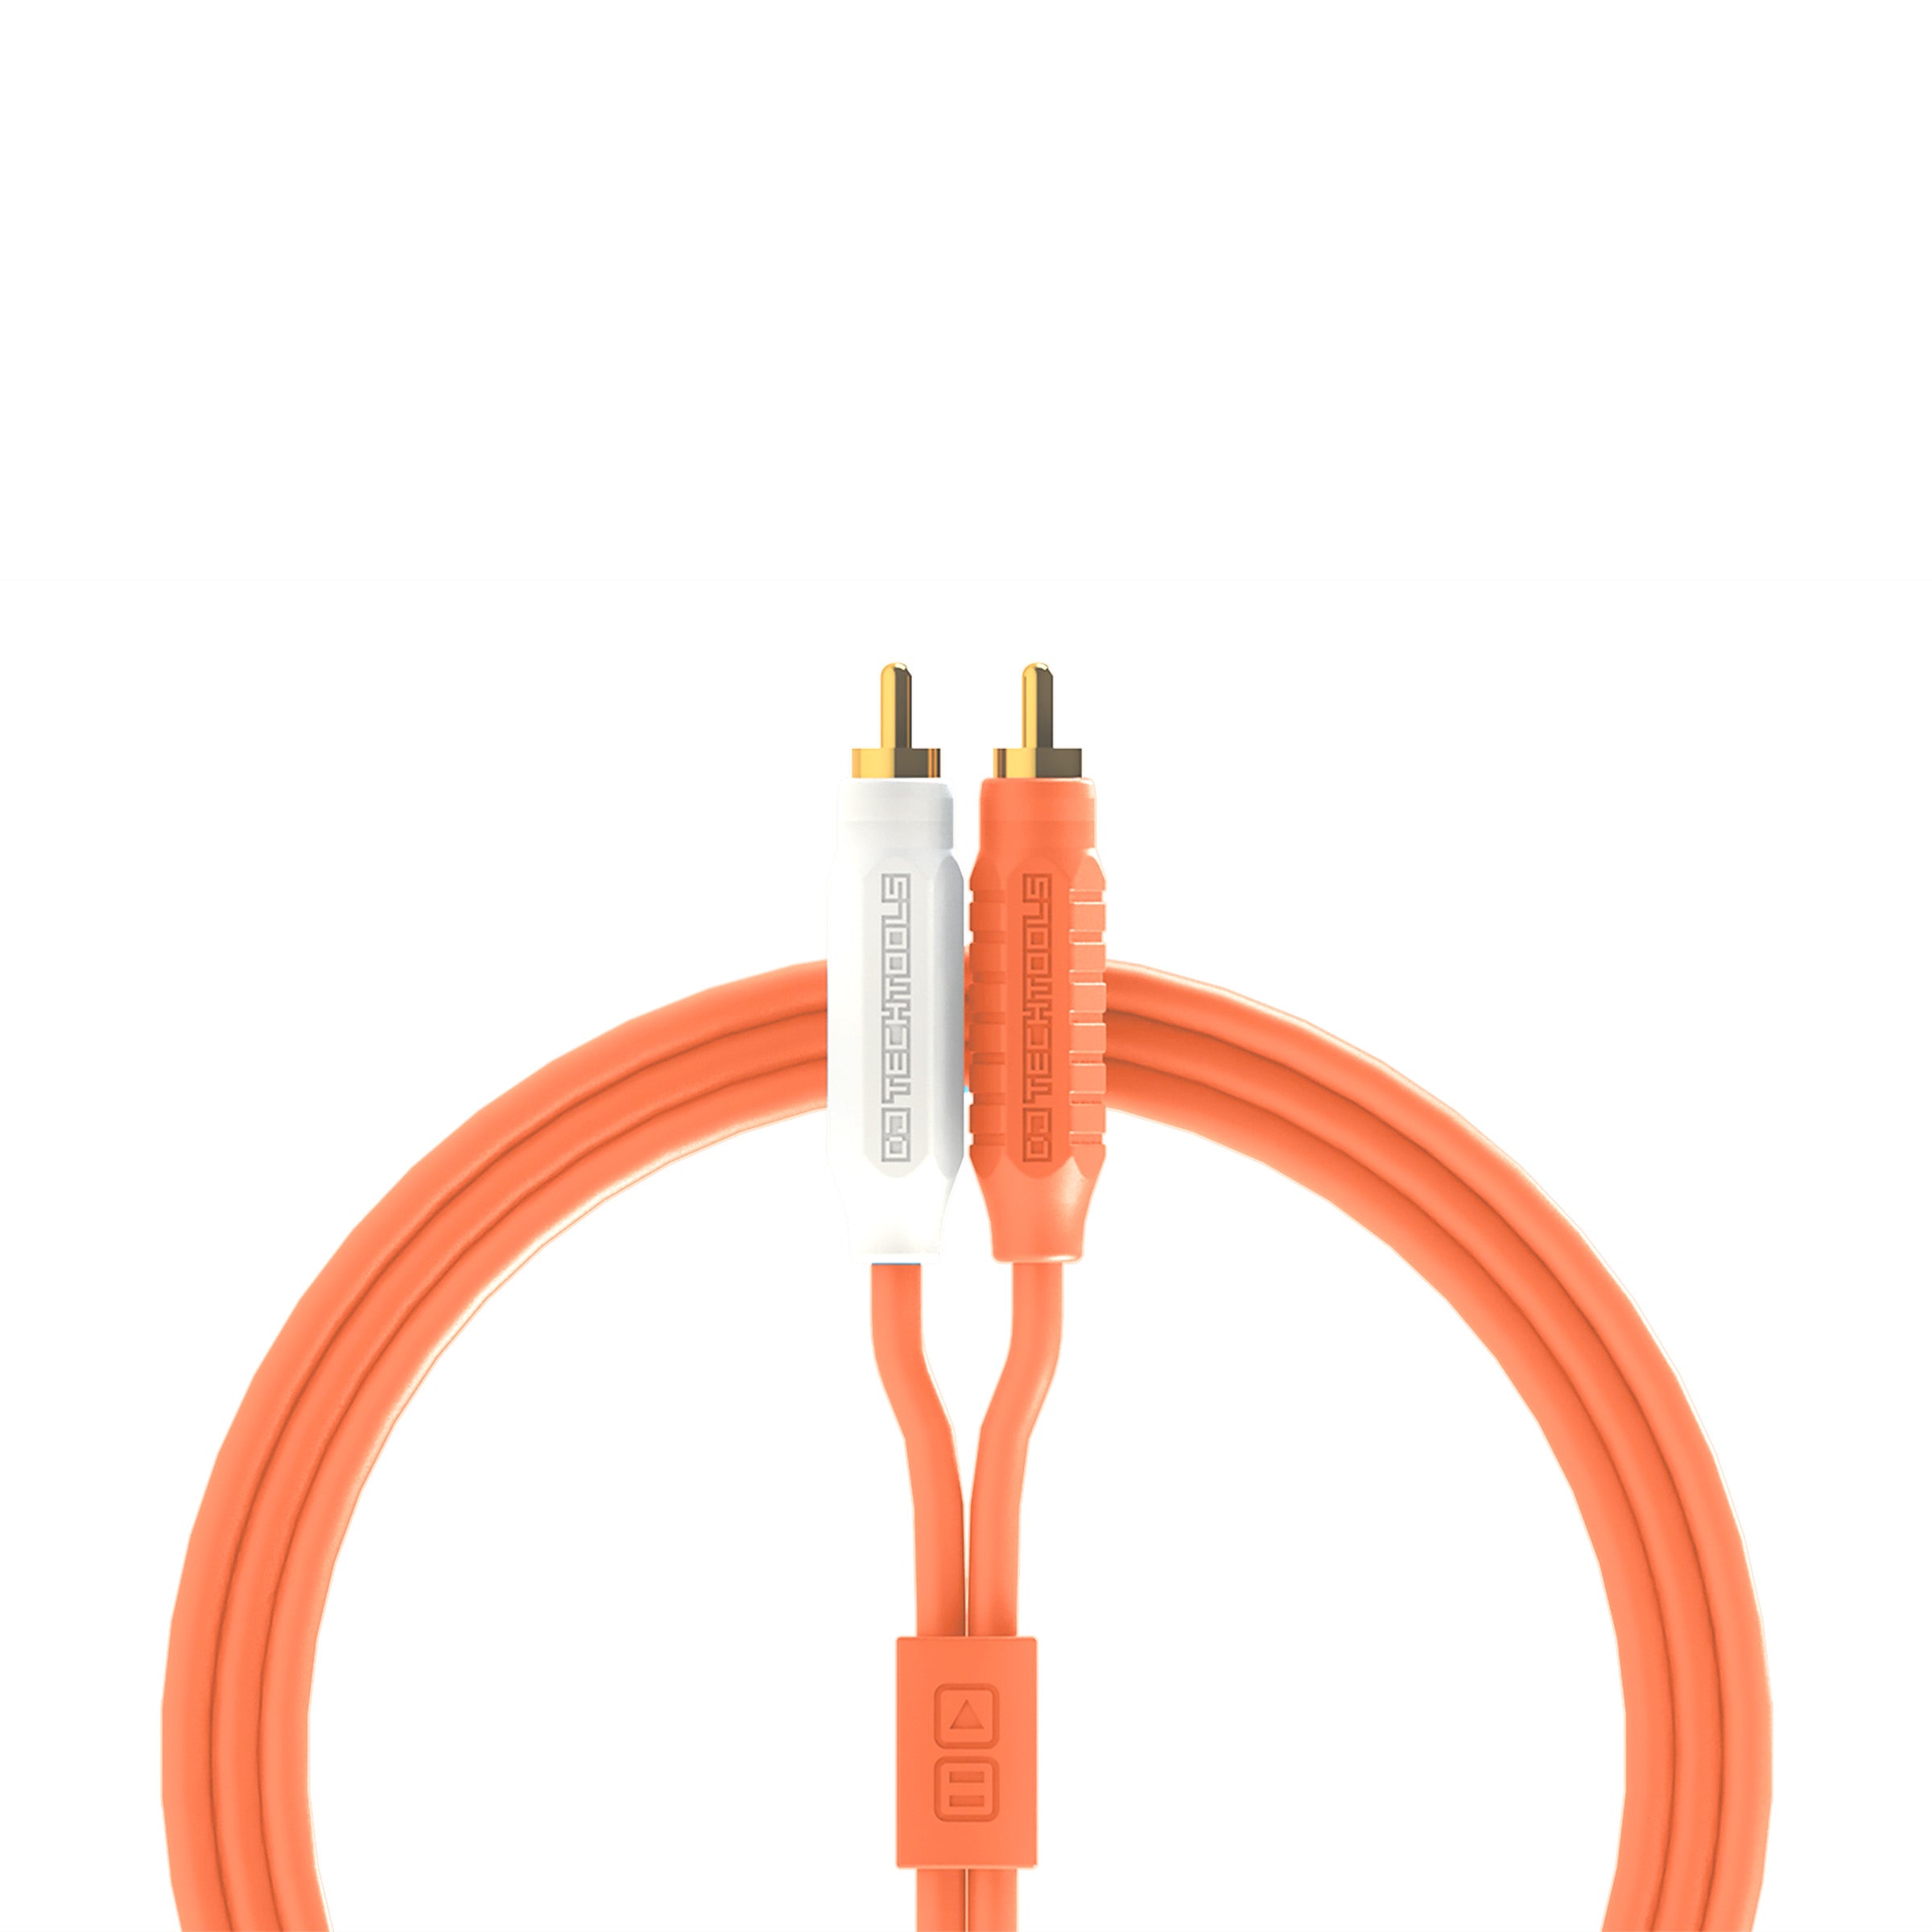 DJ TechTools Chroma Cables Audio RCA to RCA 2m  - Orange